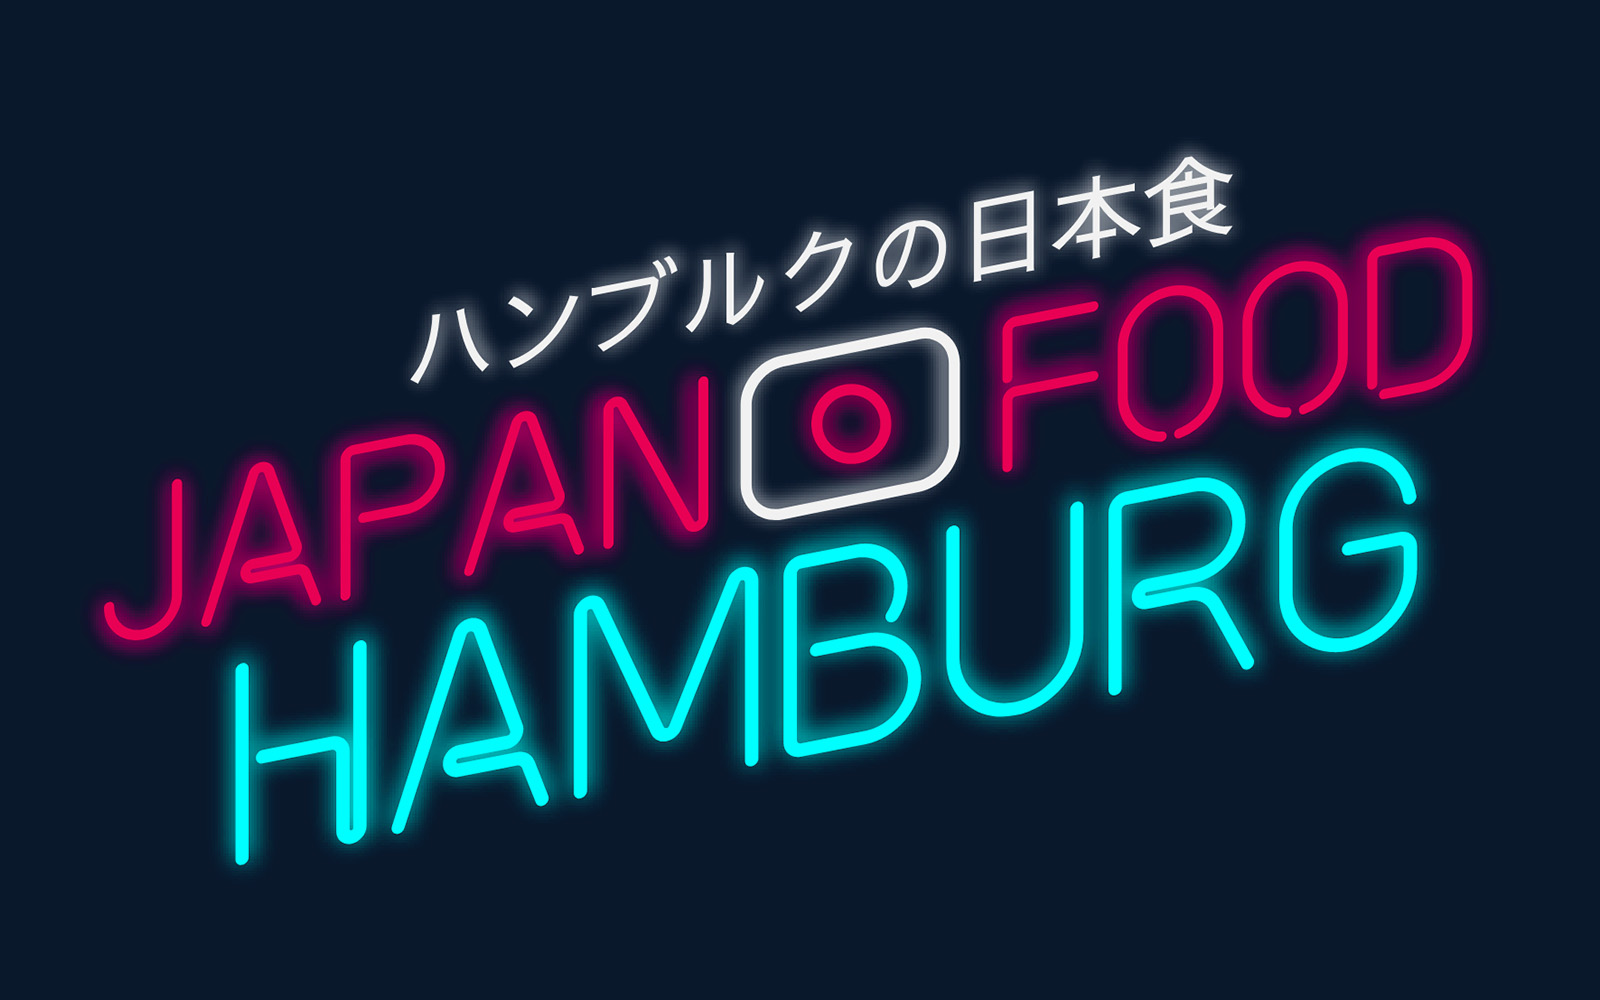 Japan Food Hamburg (WIP)